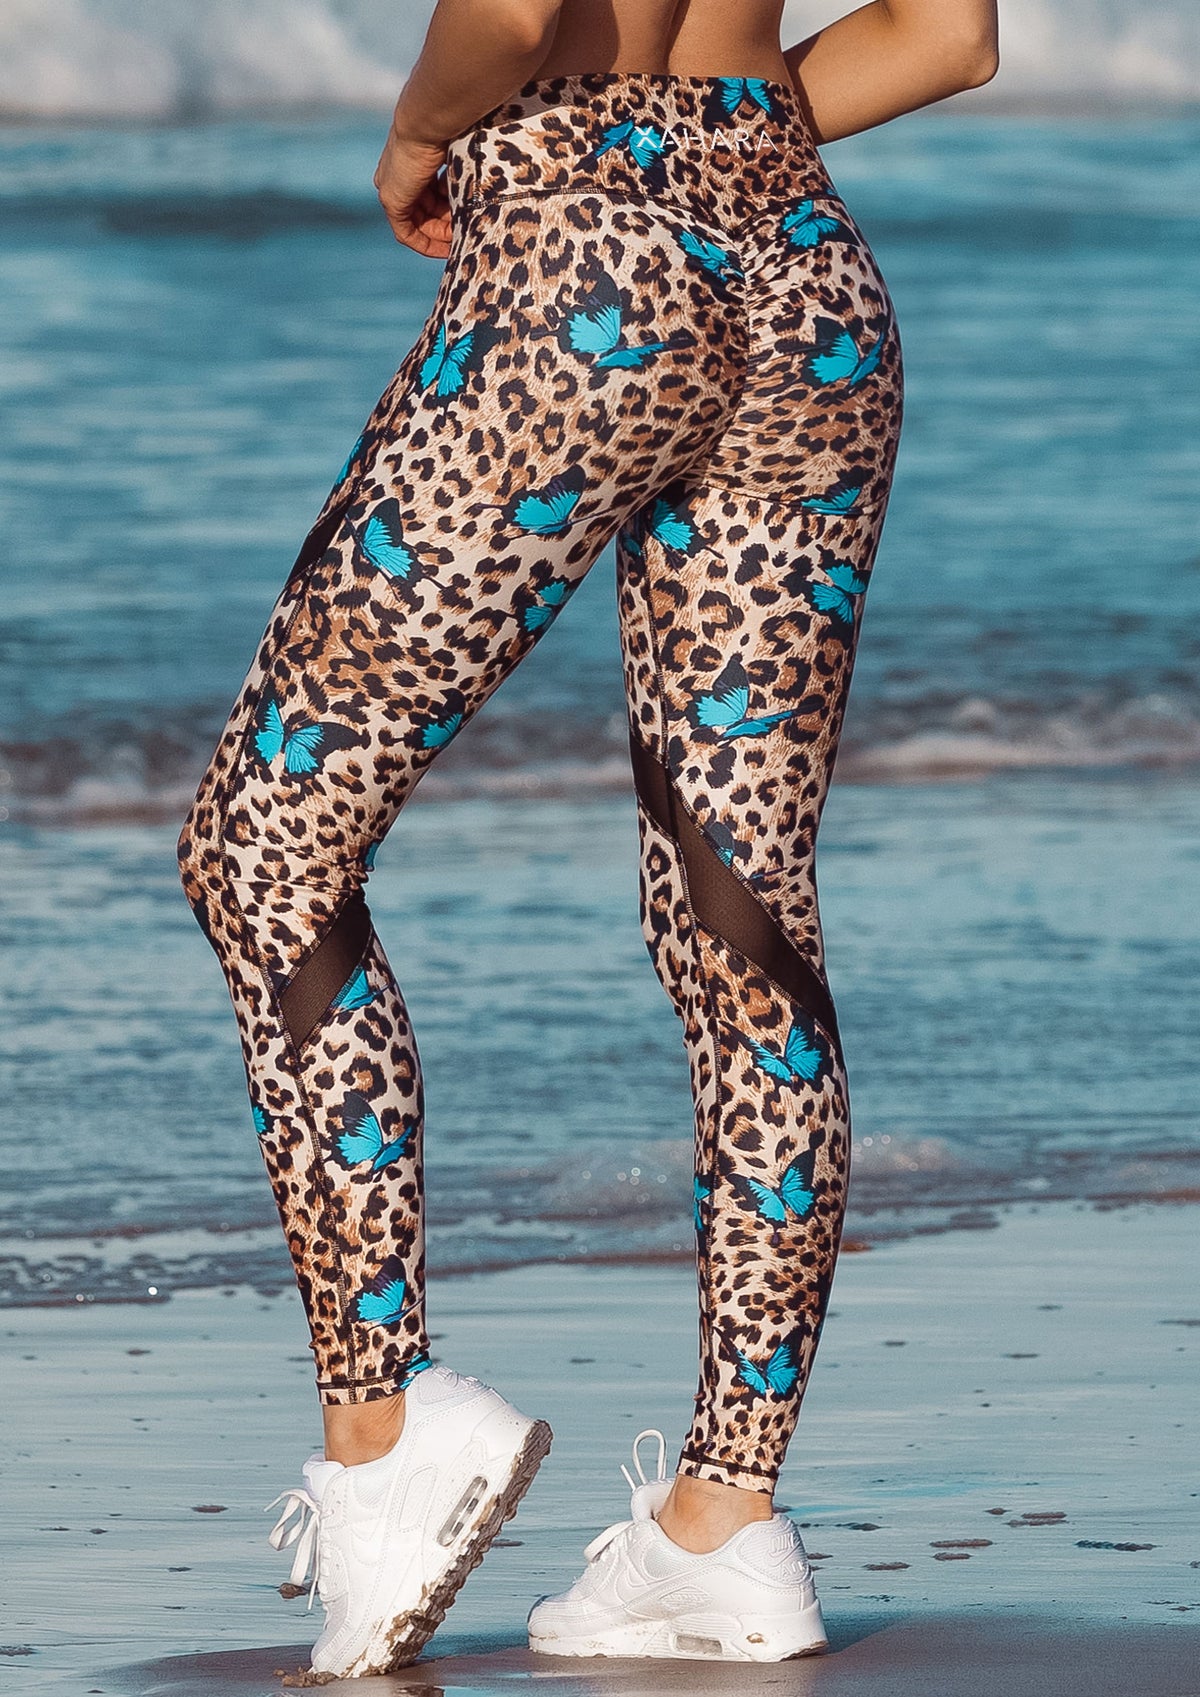 Bootylicious Butterfly Leopard Legging - Xahara Activewear